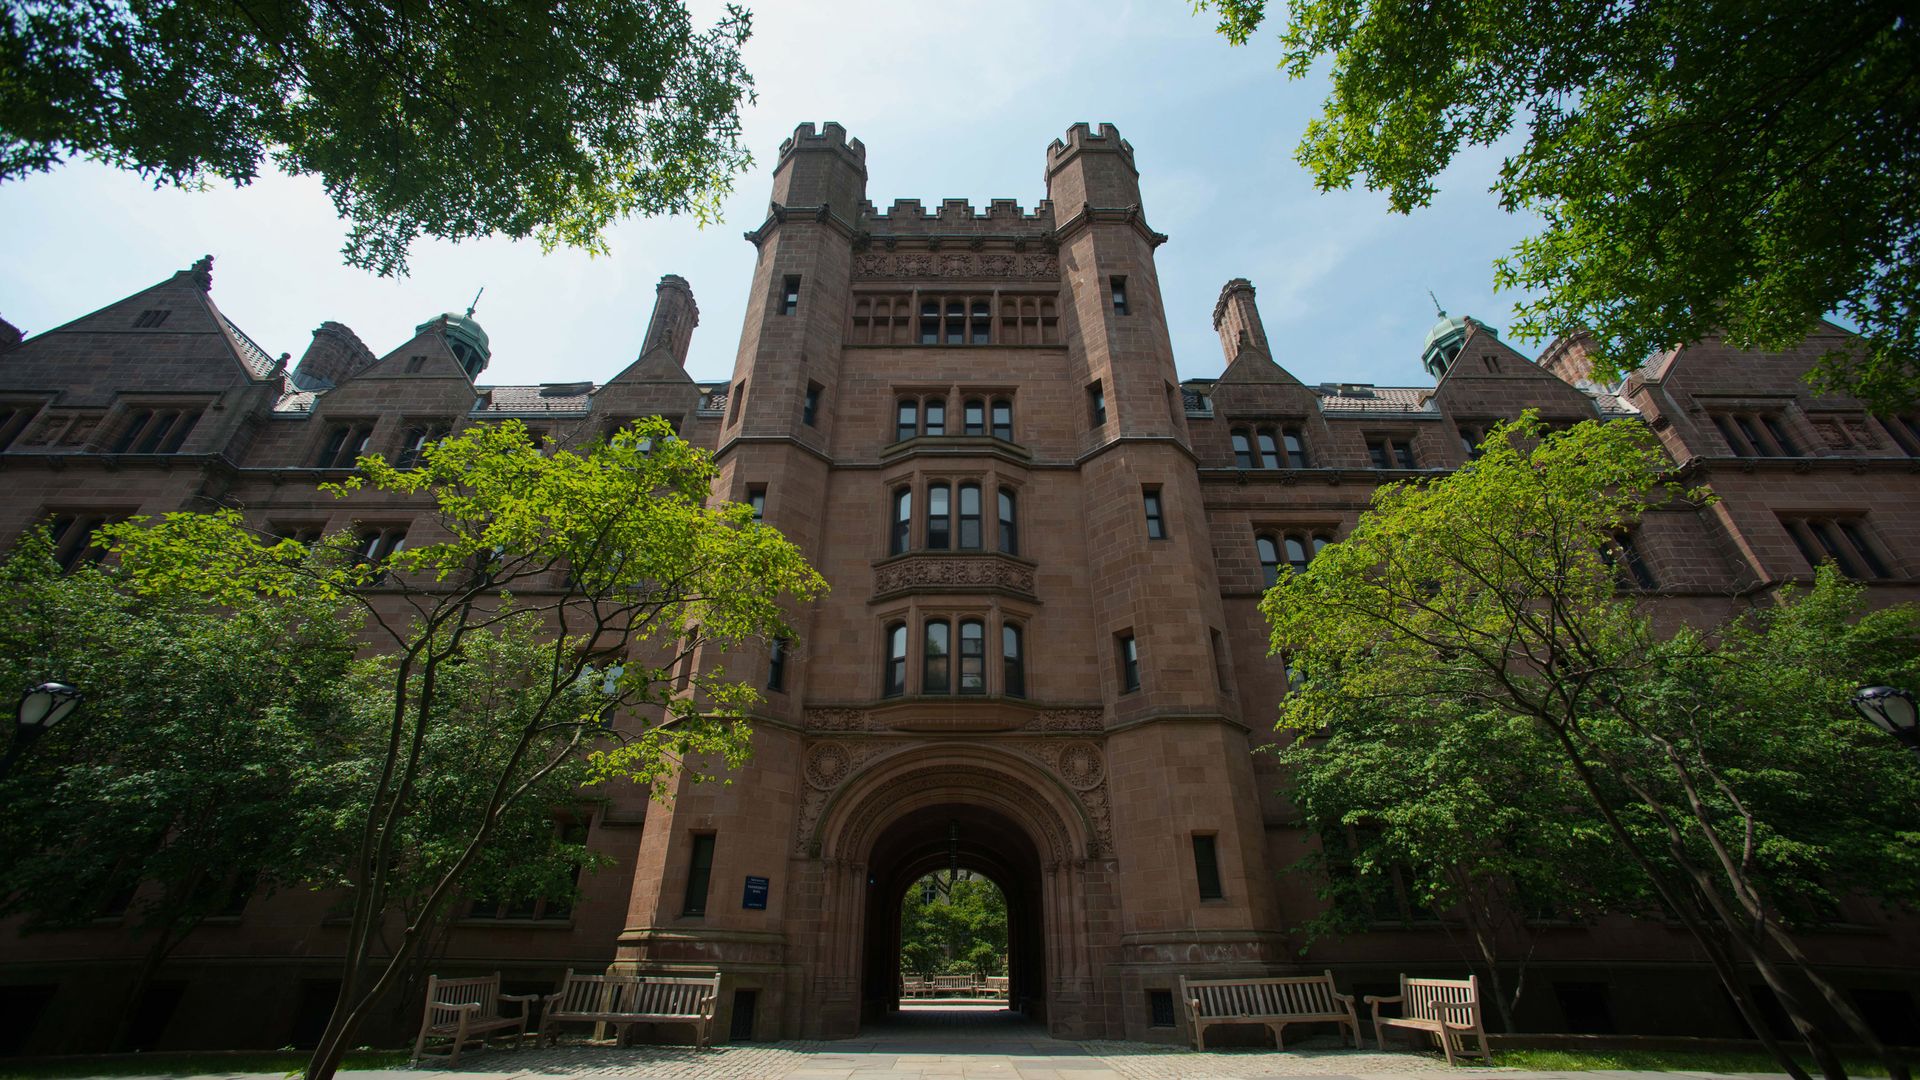 Yale campus